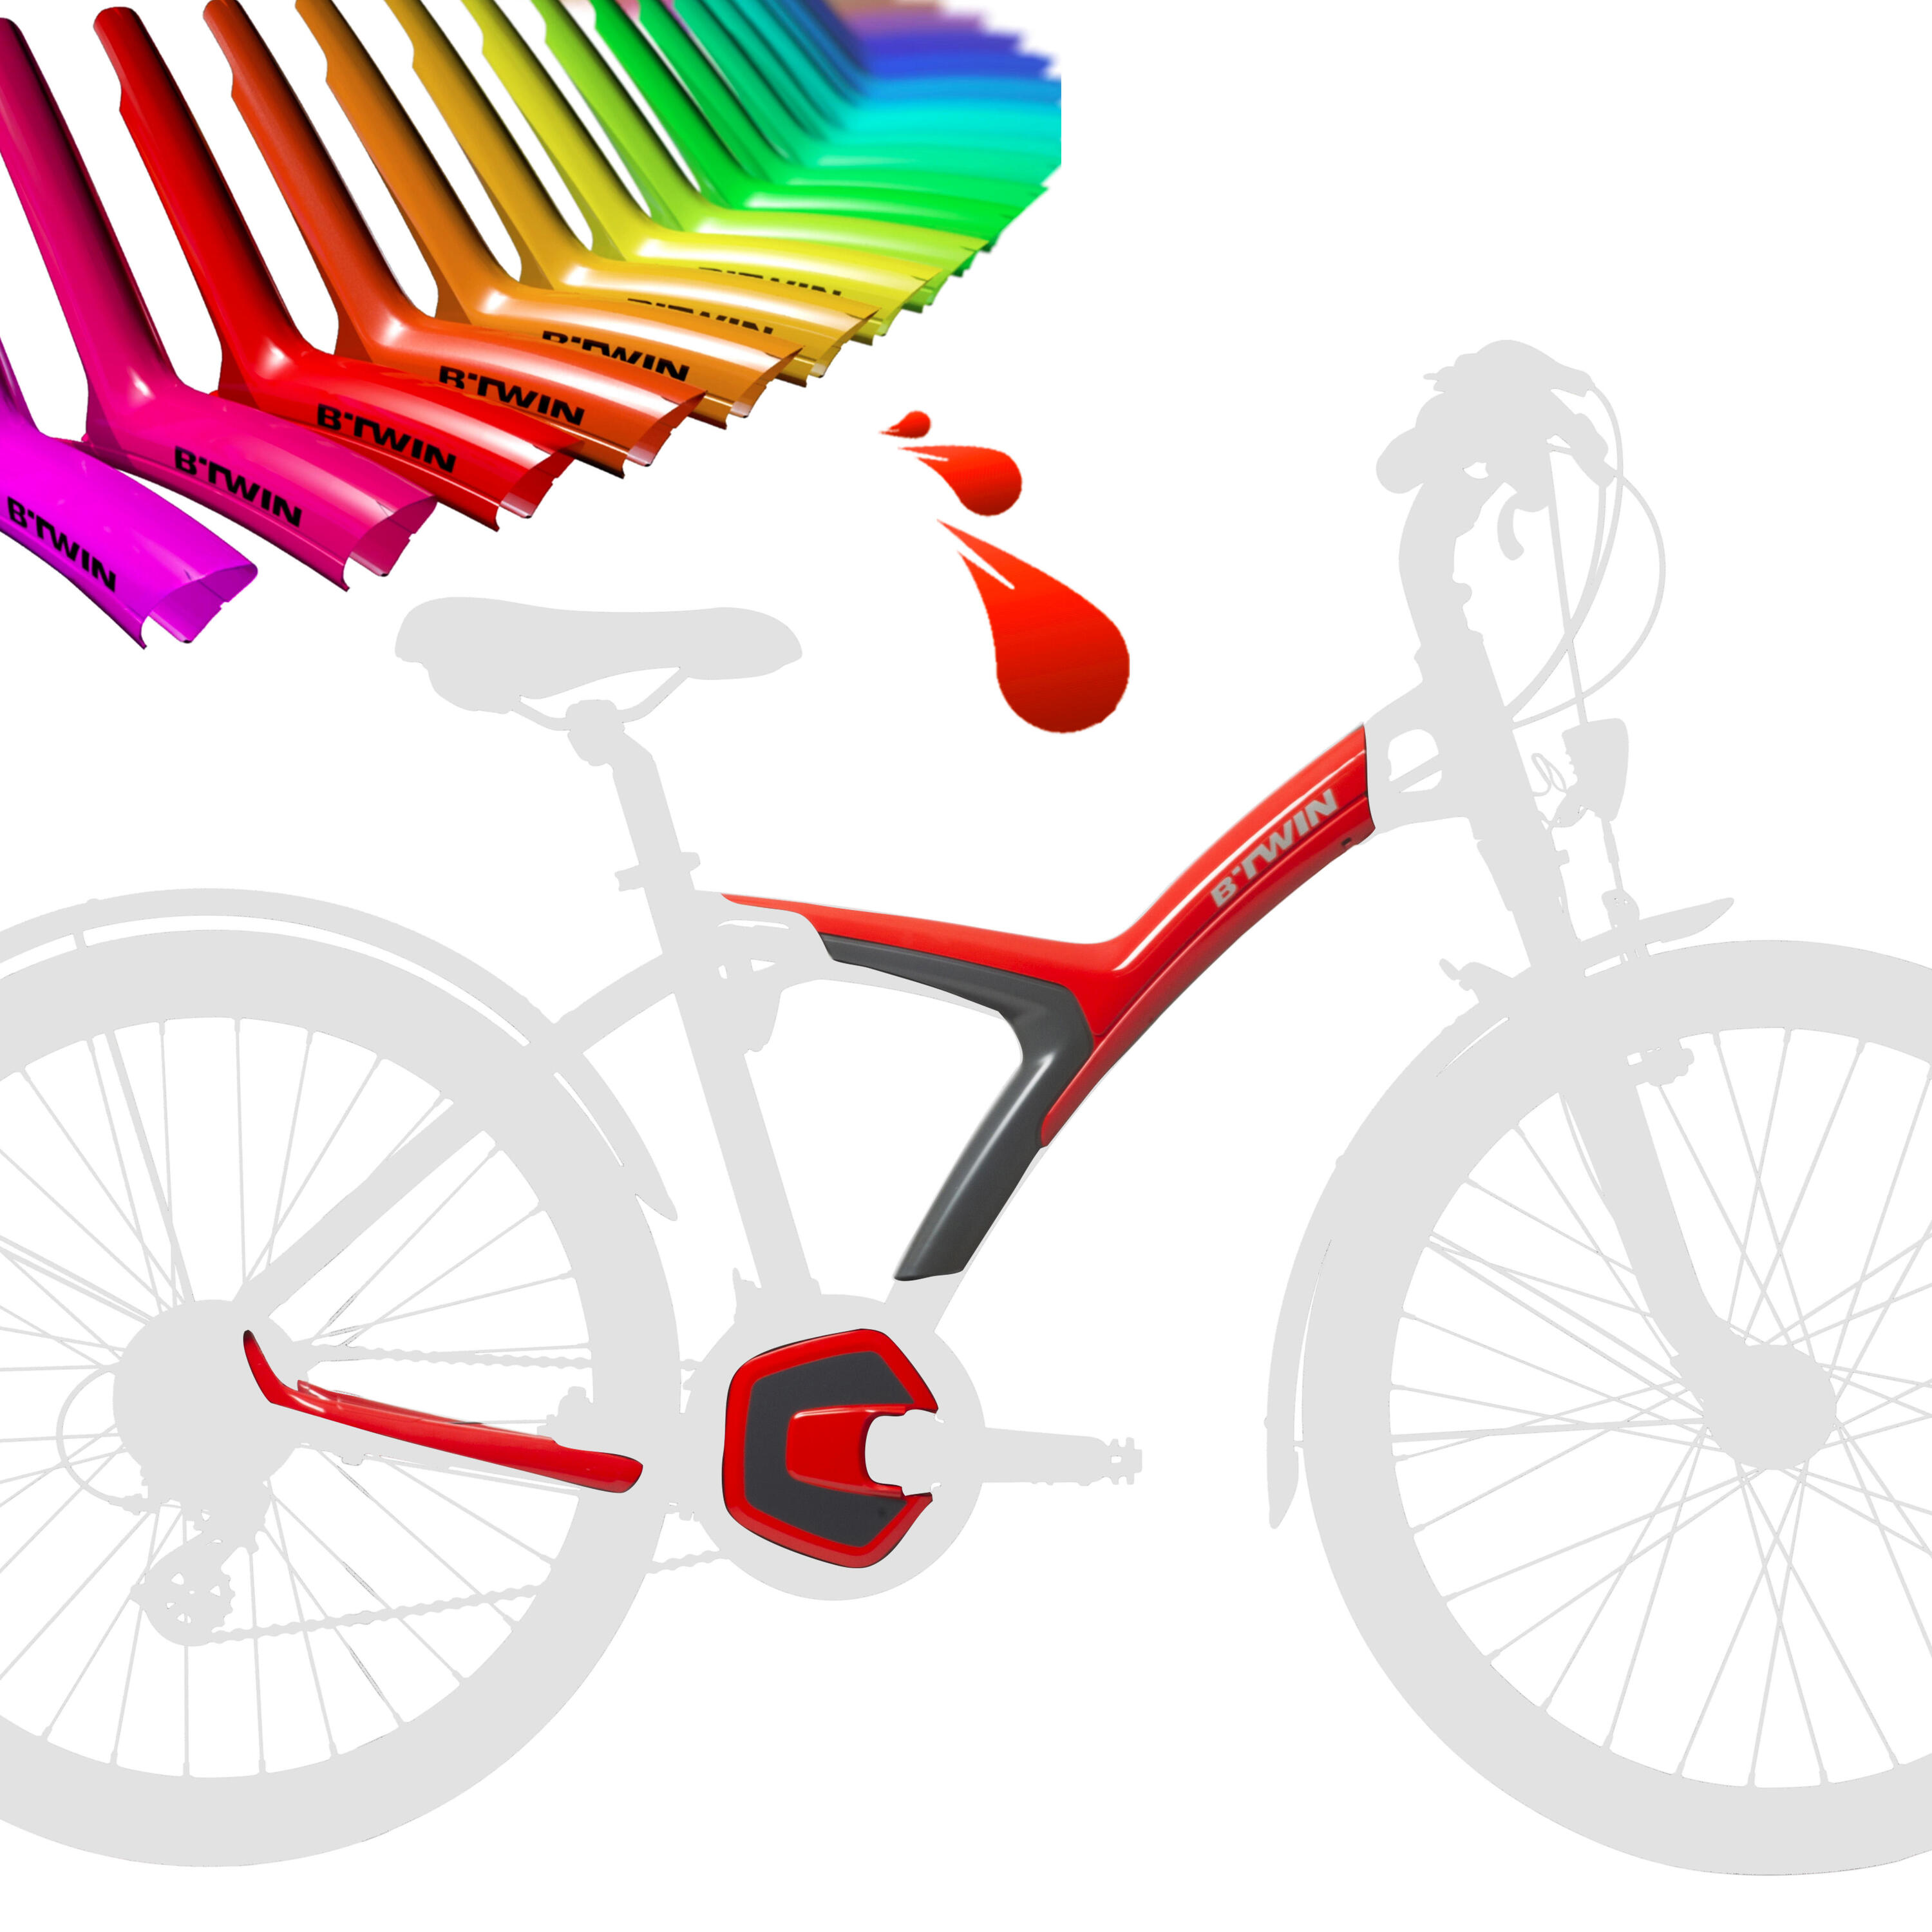 BTWIN B'Original Hybrid Bike Covers - Red